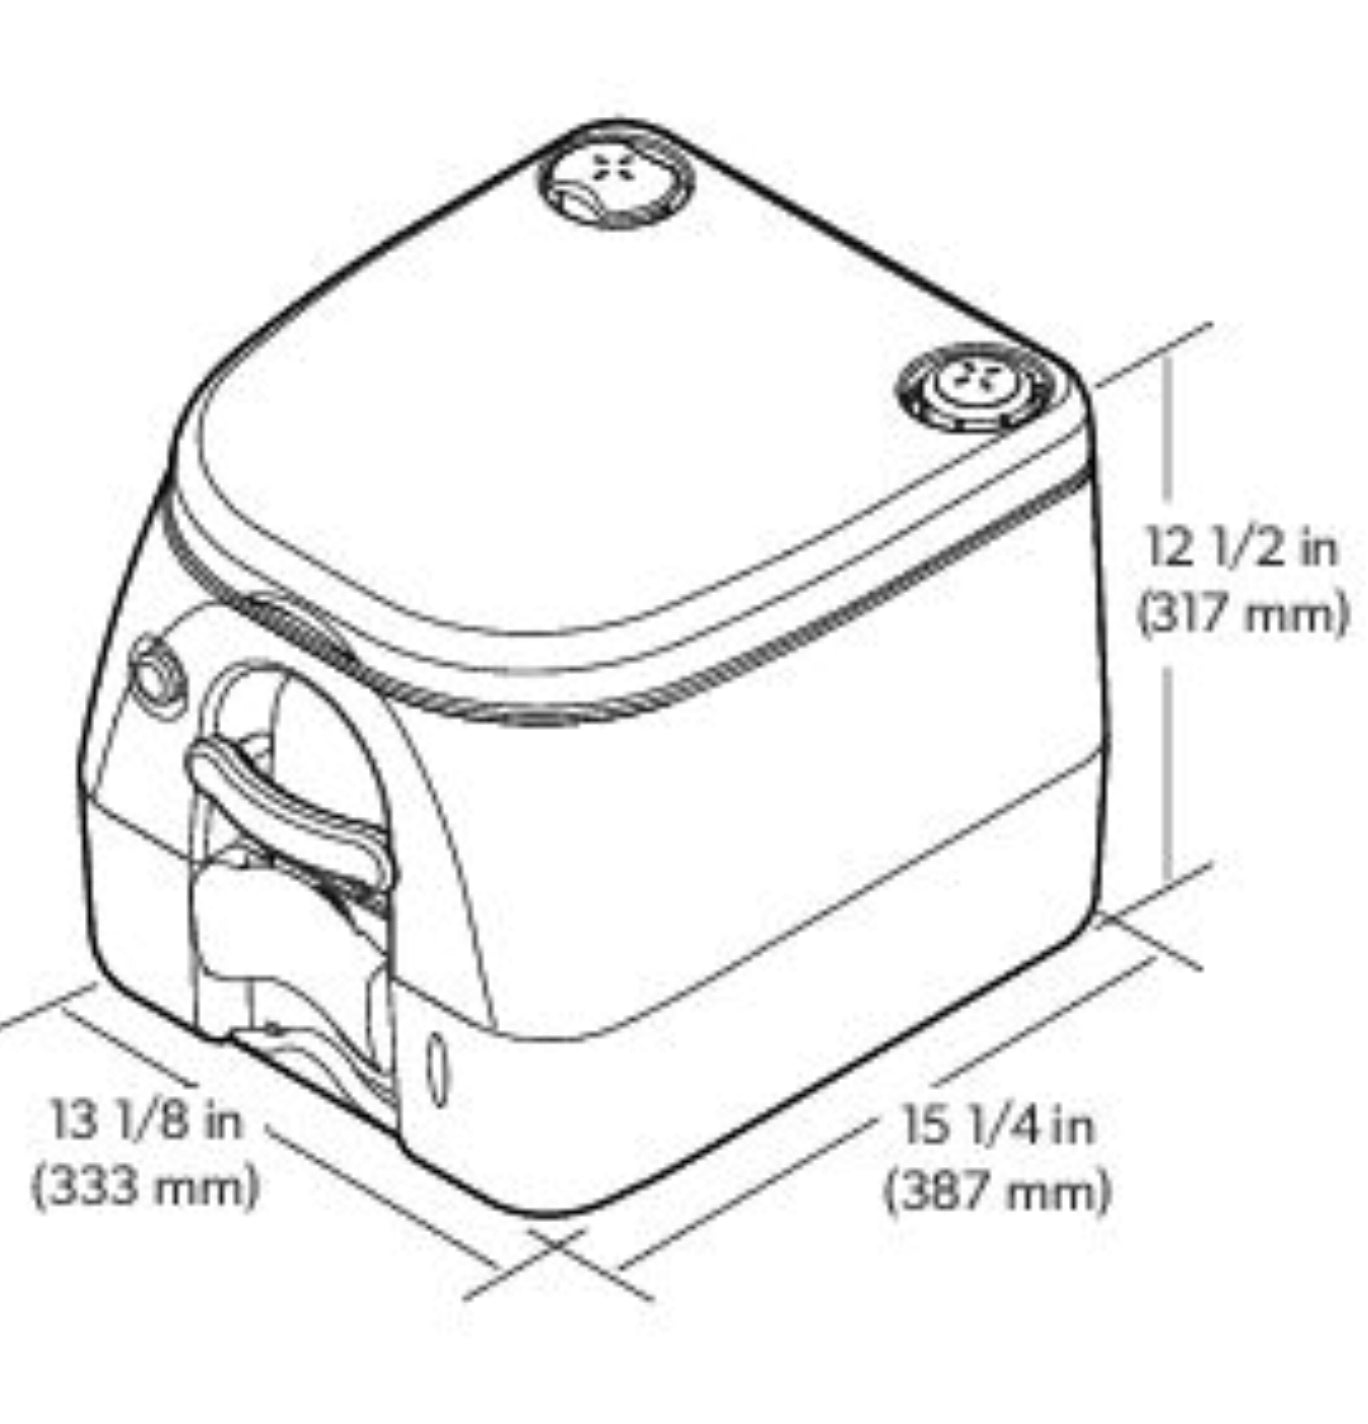 Dometic 972G Portable Toilet & GreenCare Eco Friendly Tabs Bundle